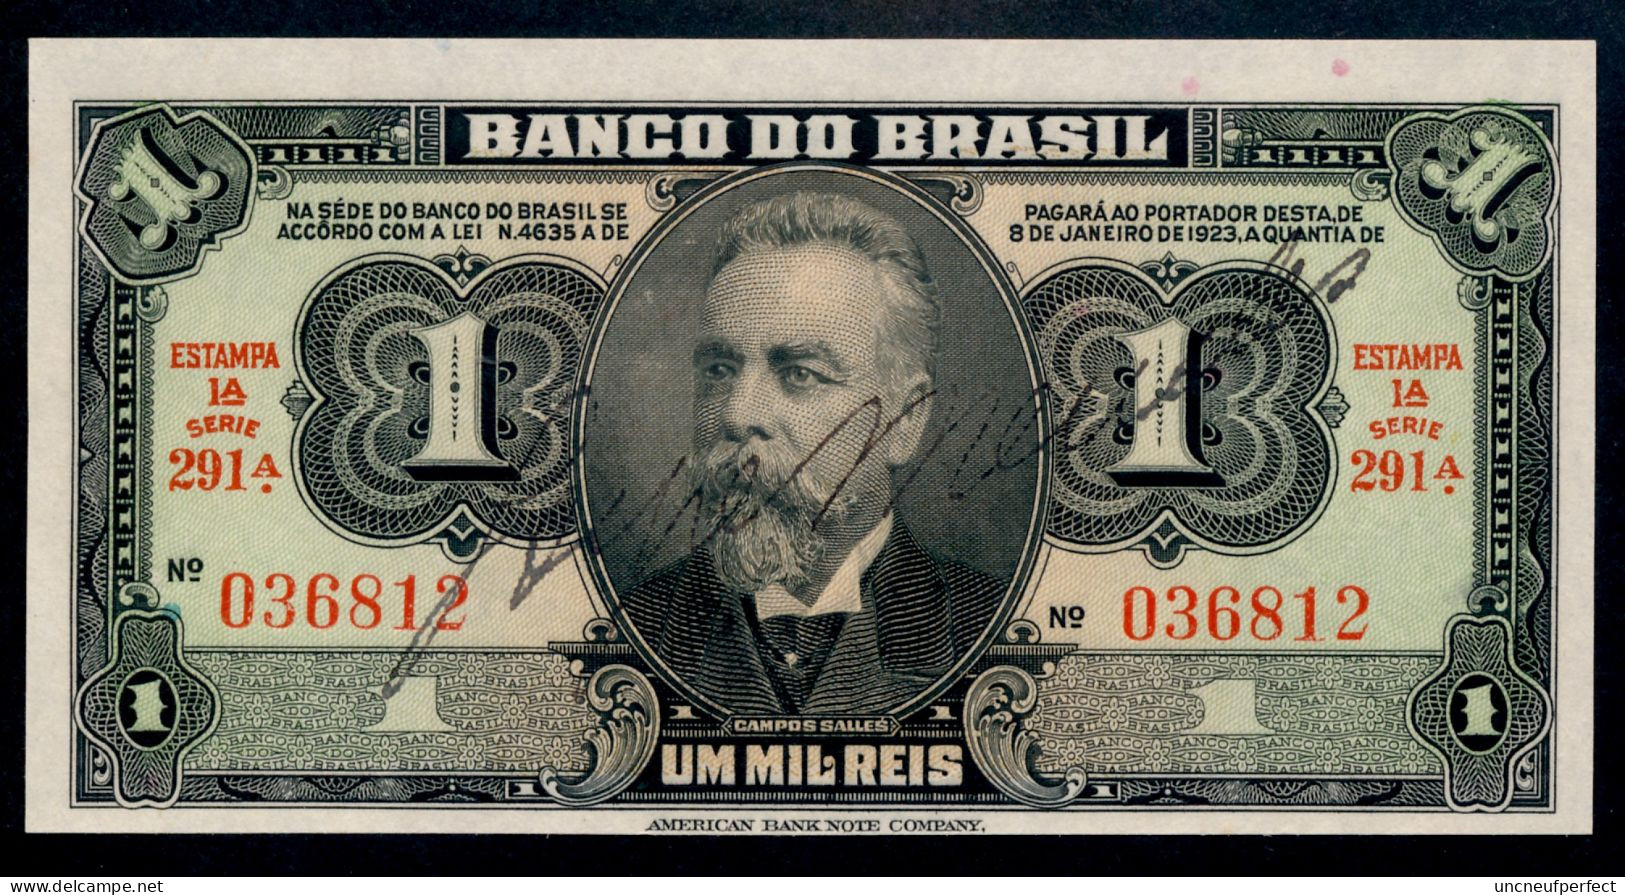 Brésil P 131a (1944) 1 MIL REIS - UNC - Série 291 N° 036812 RARE!!! - Brazil